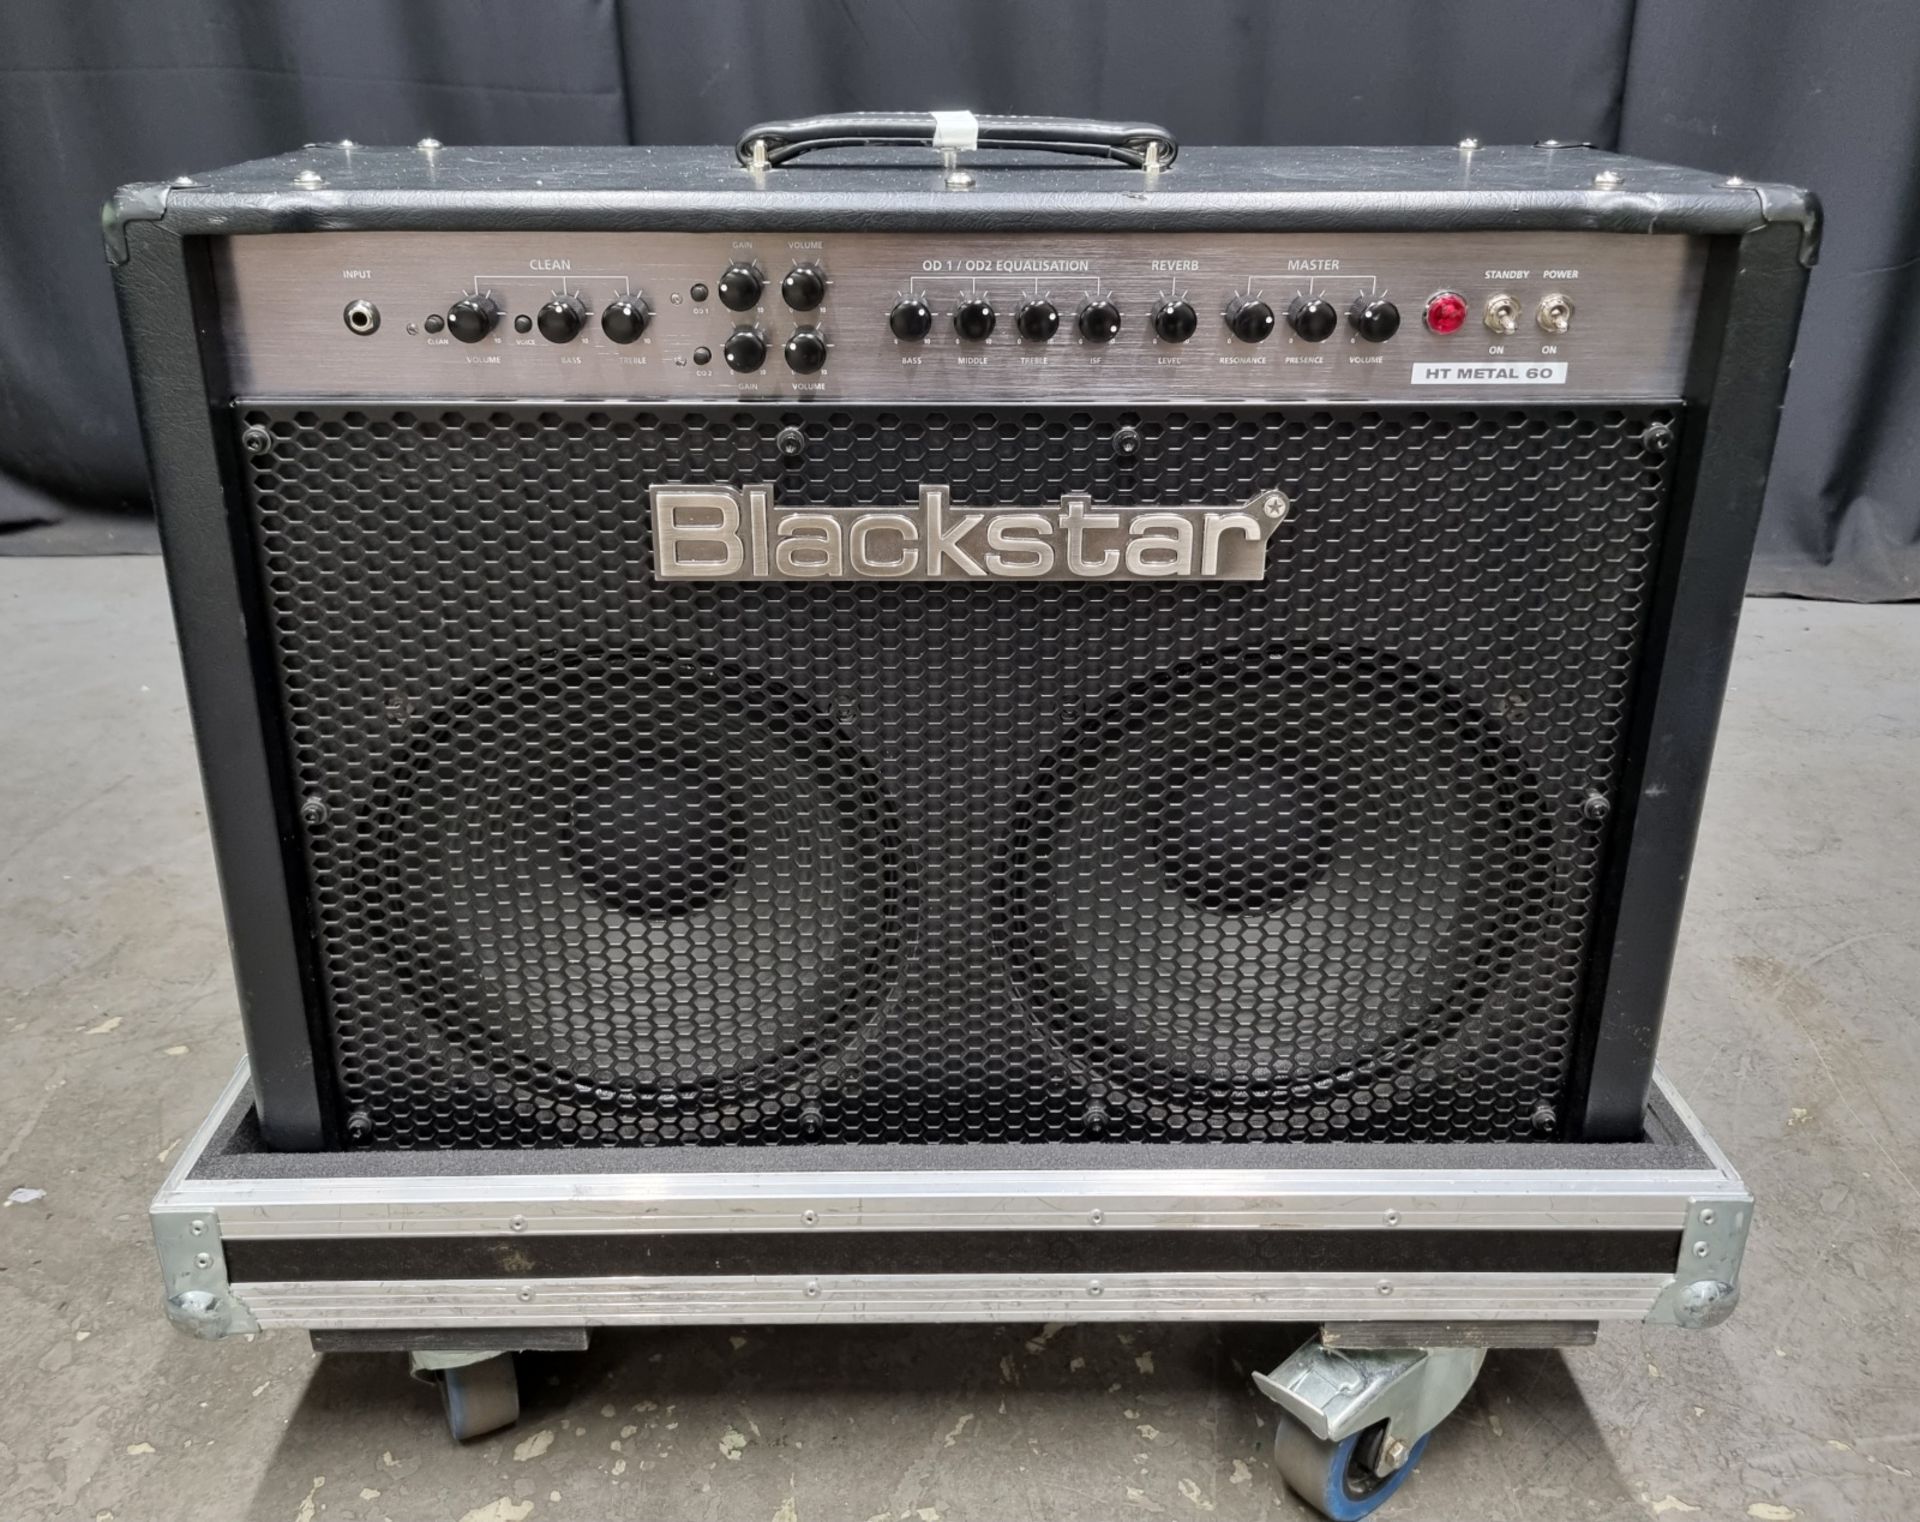 Blackstar HT Metal 60 guitar amplifier with castle case flight case on castors - Image 2 of 6